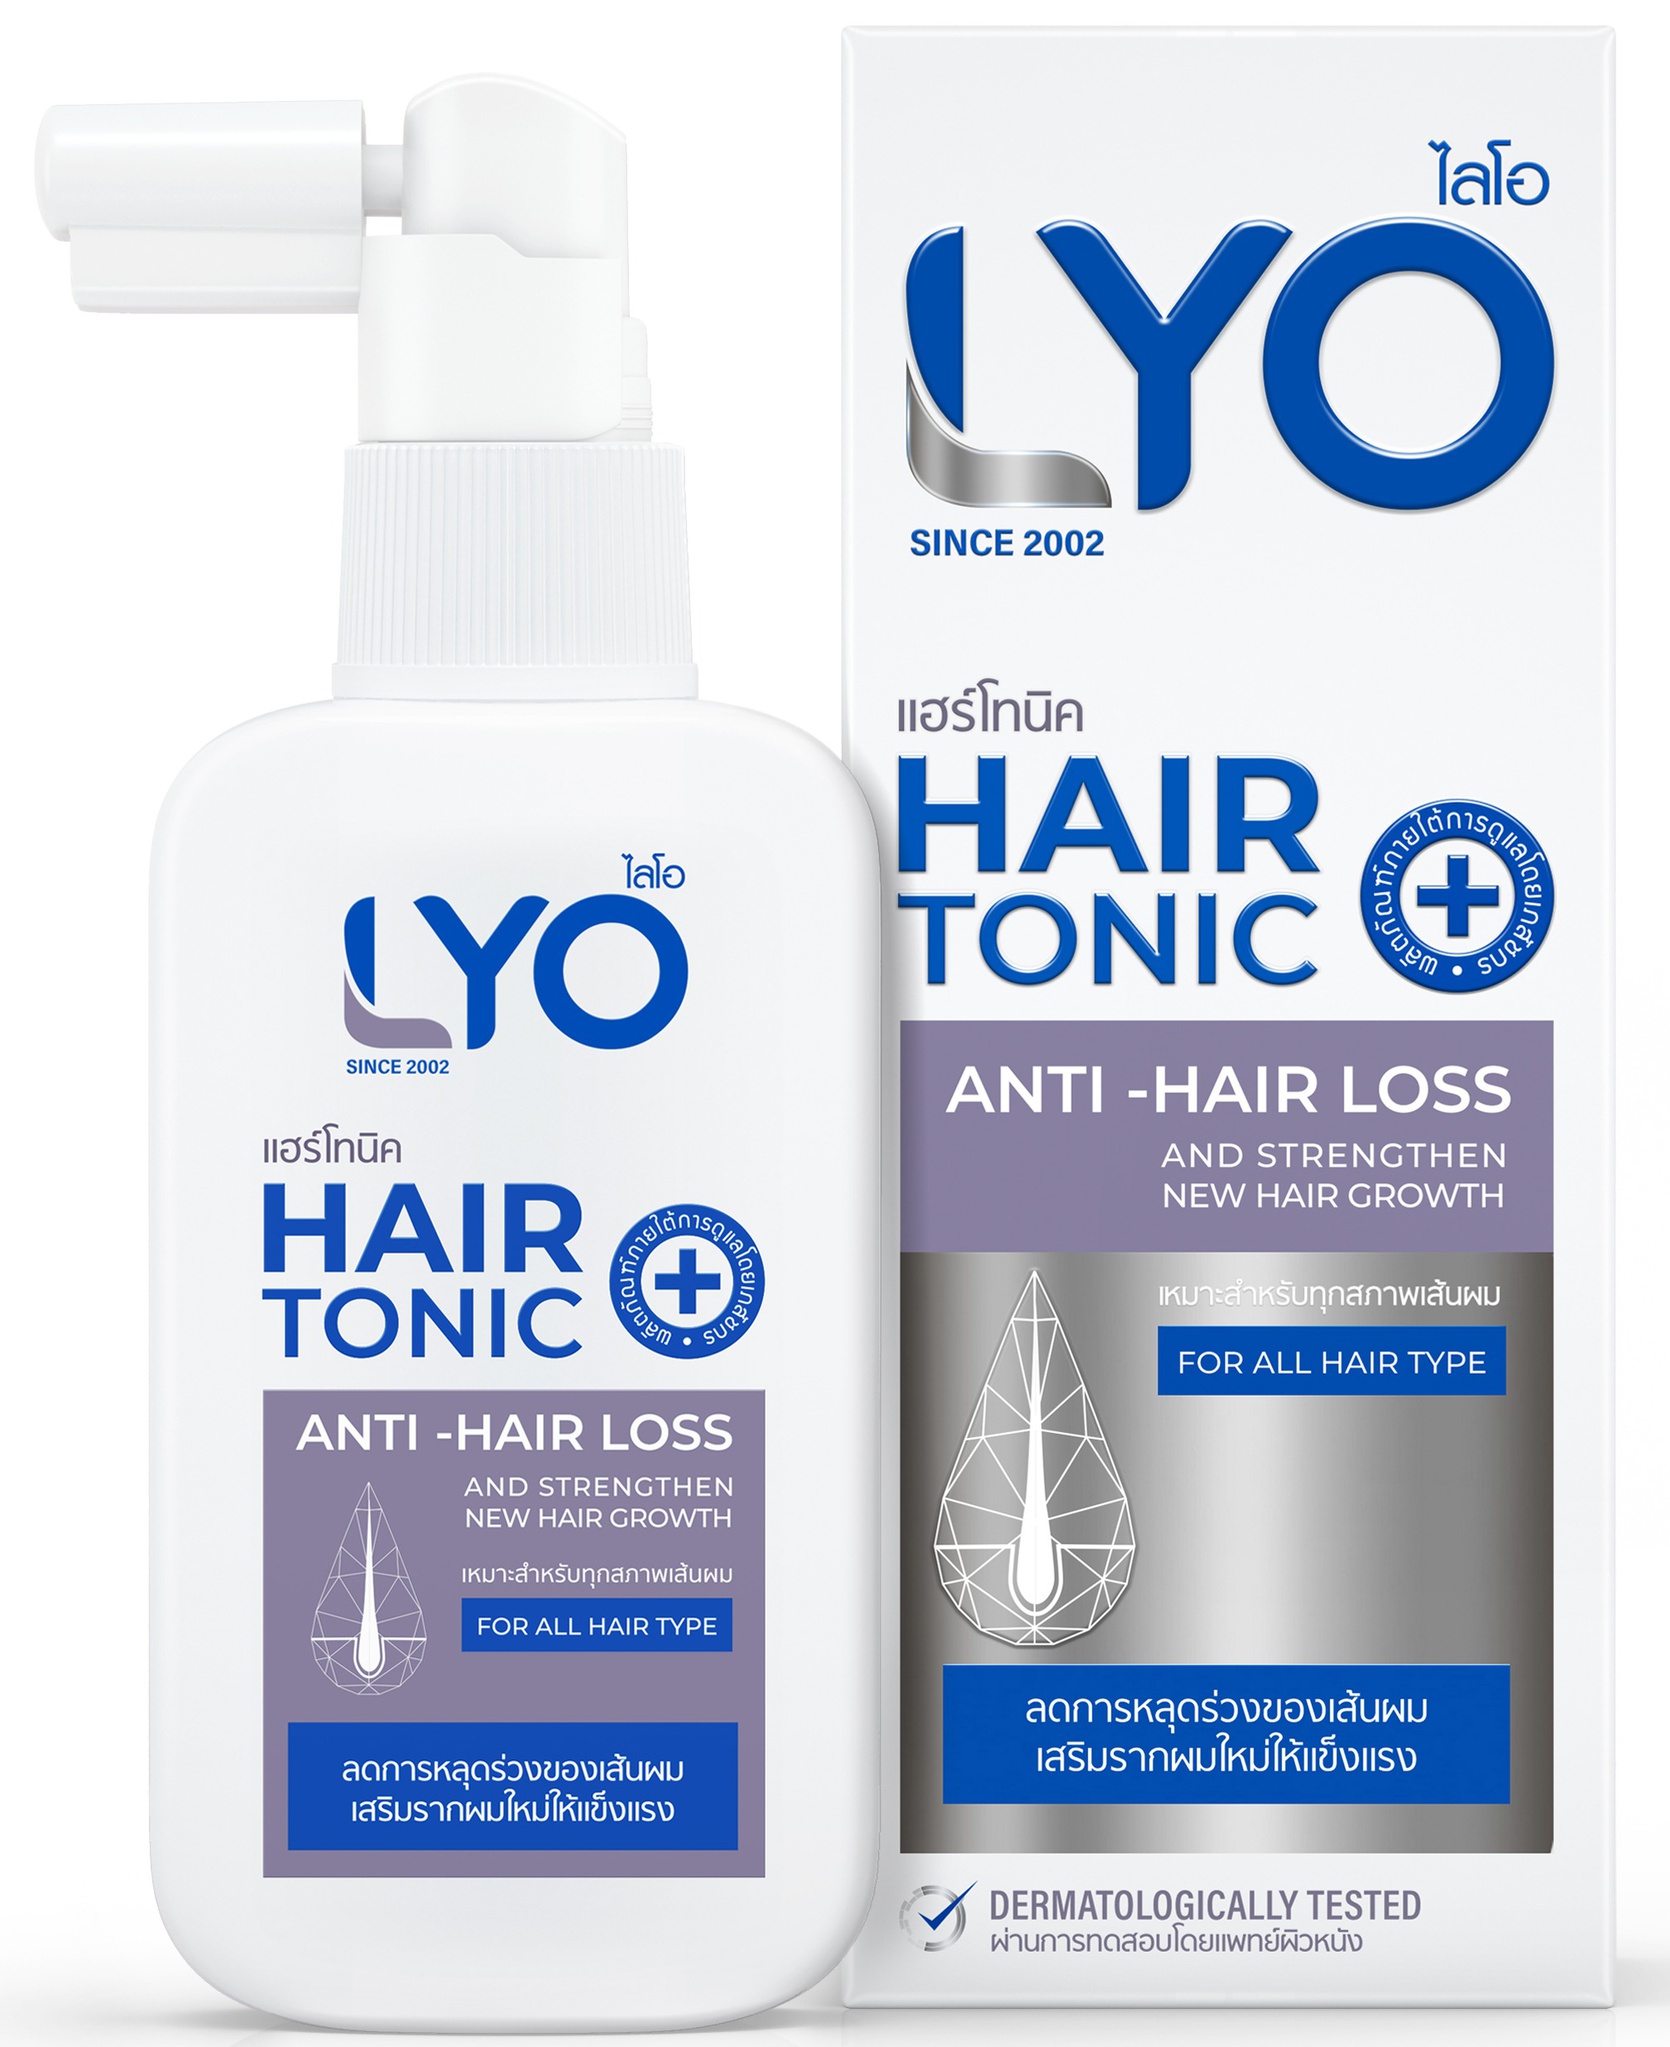 Lyo Hair Tonic